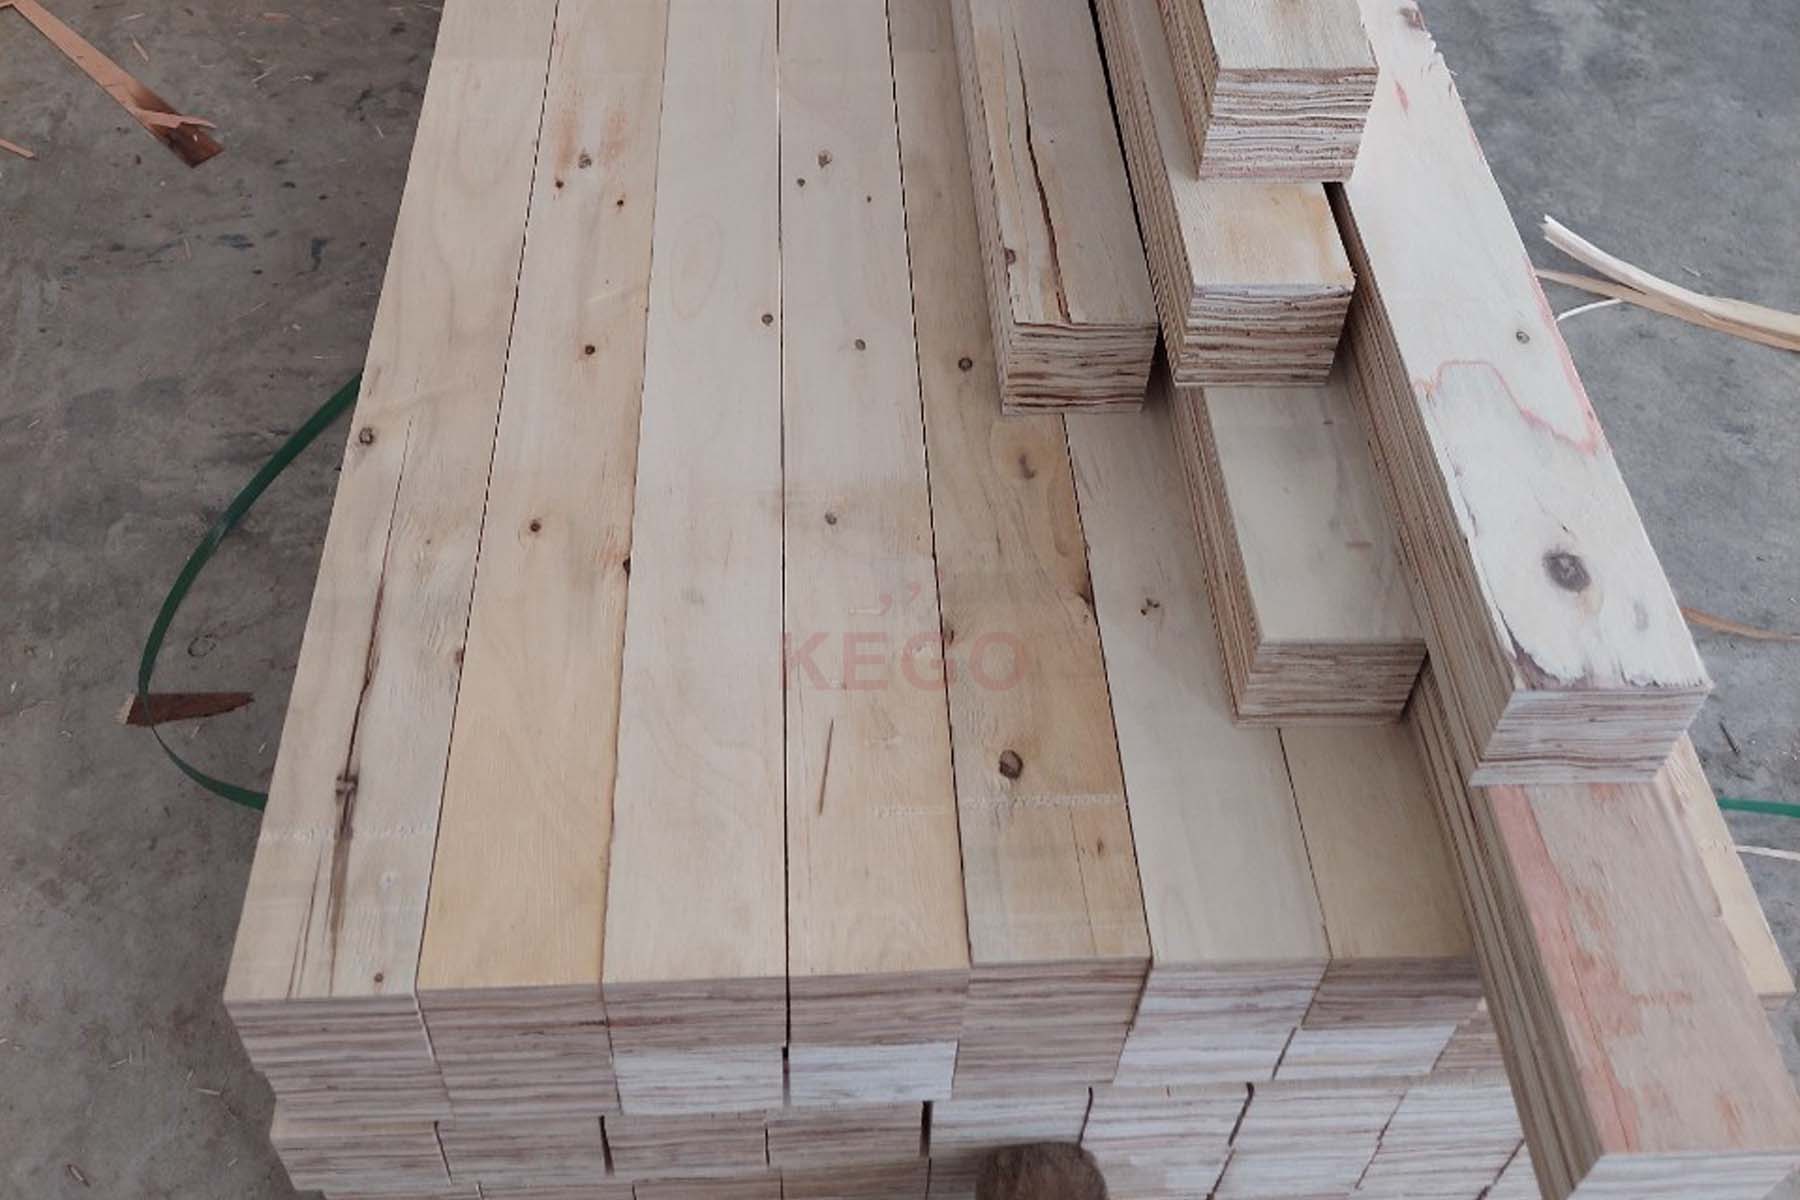 https://kego.com.vn/wp-content/uploads/2015/09/laminated-veneer-lumber-lvl-kego-12.jpg